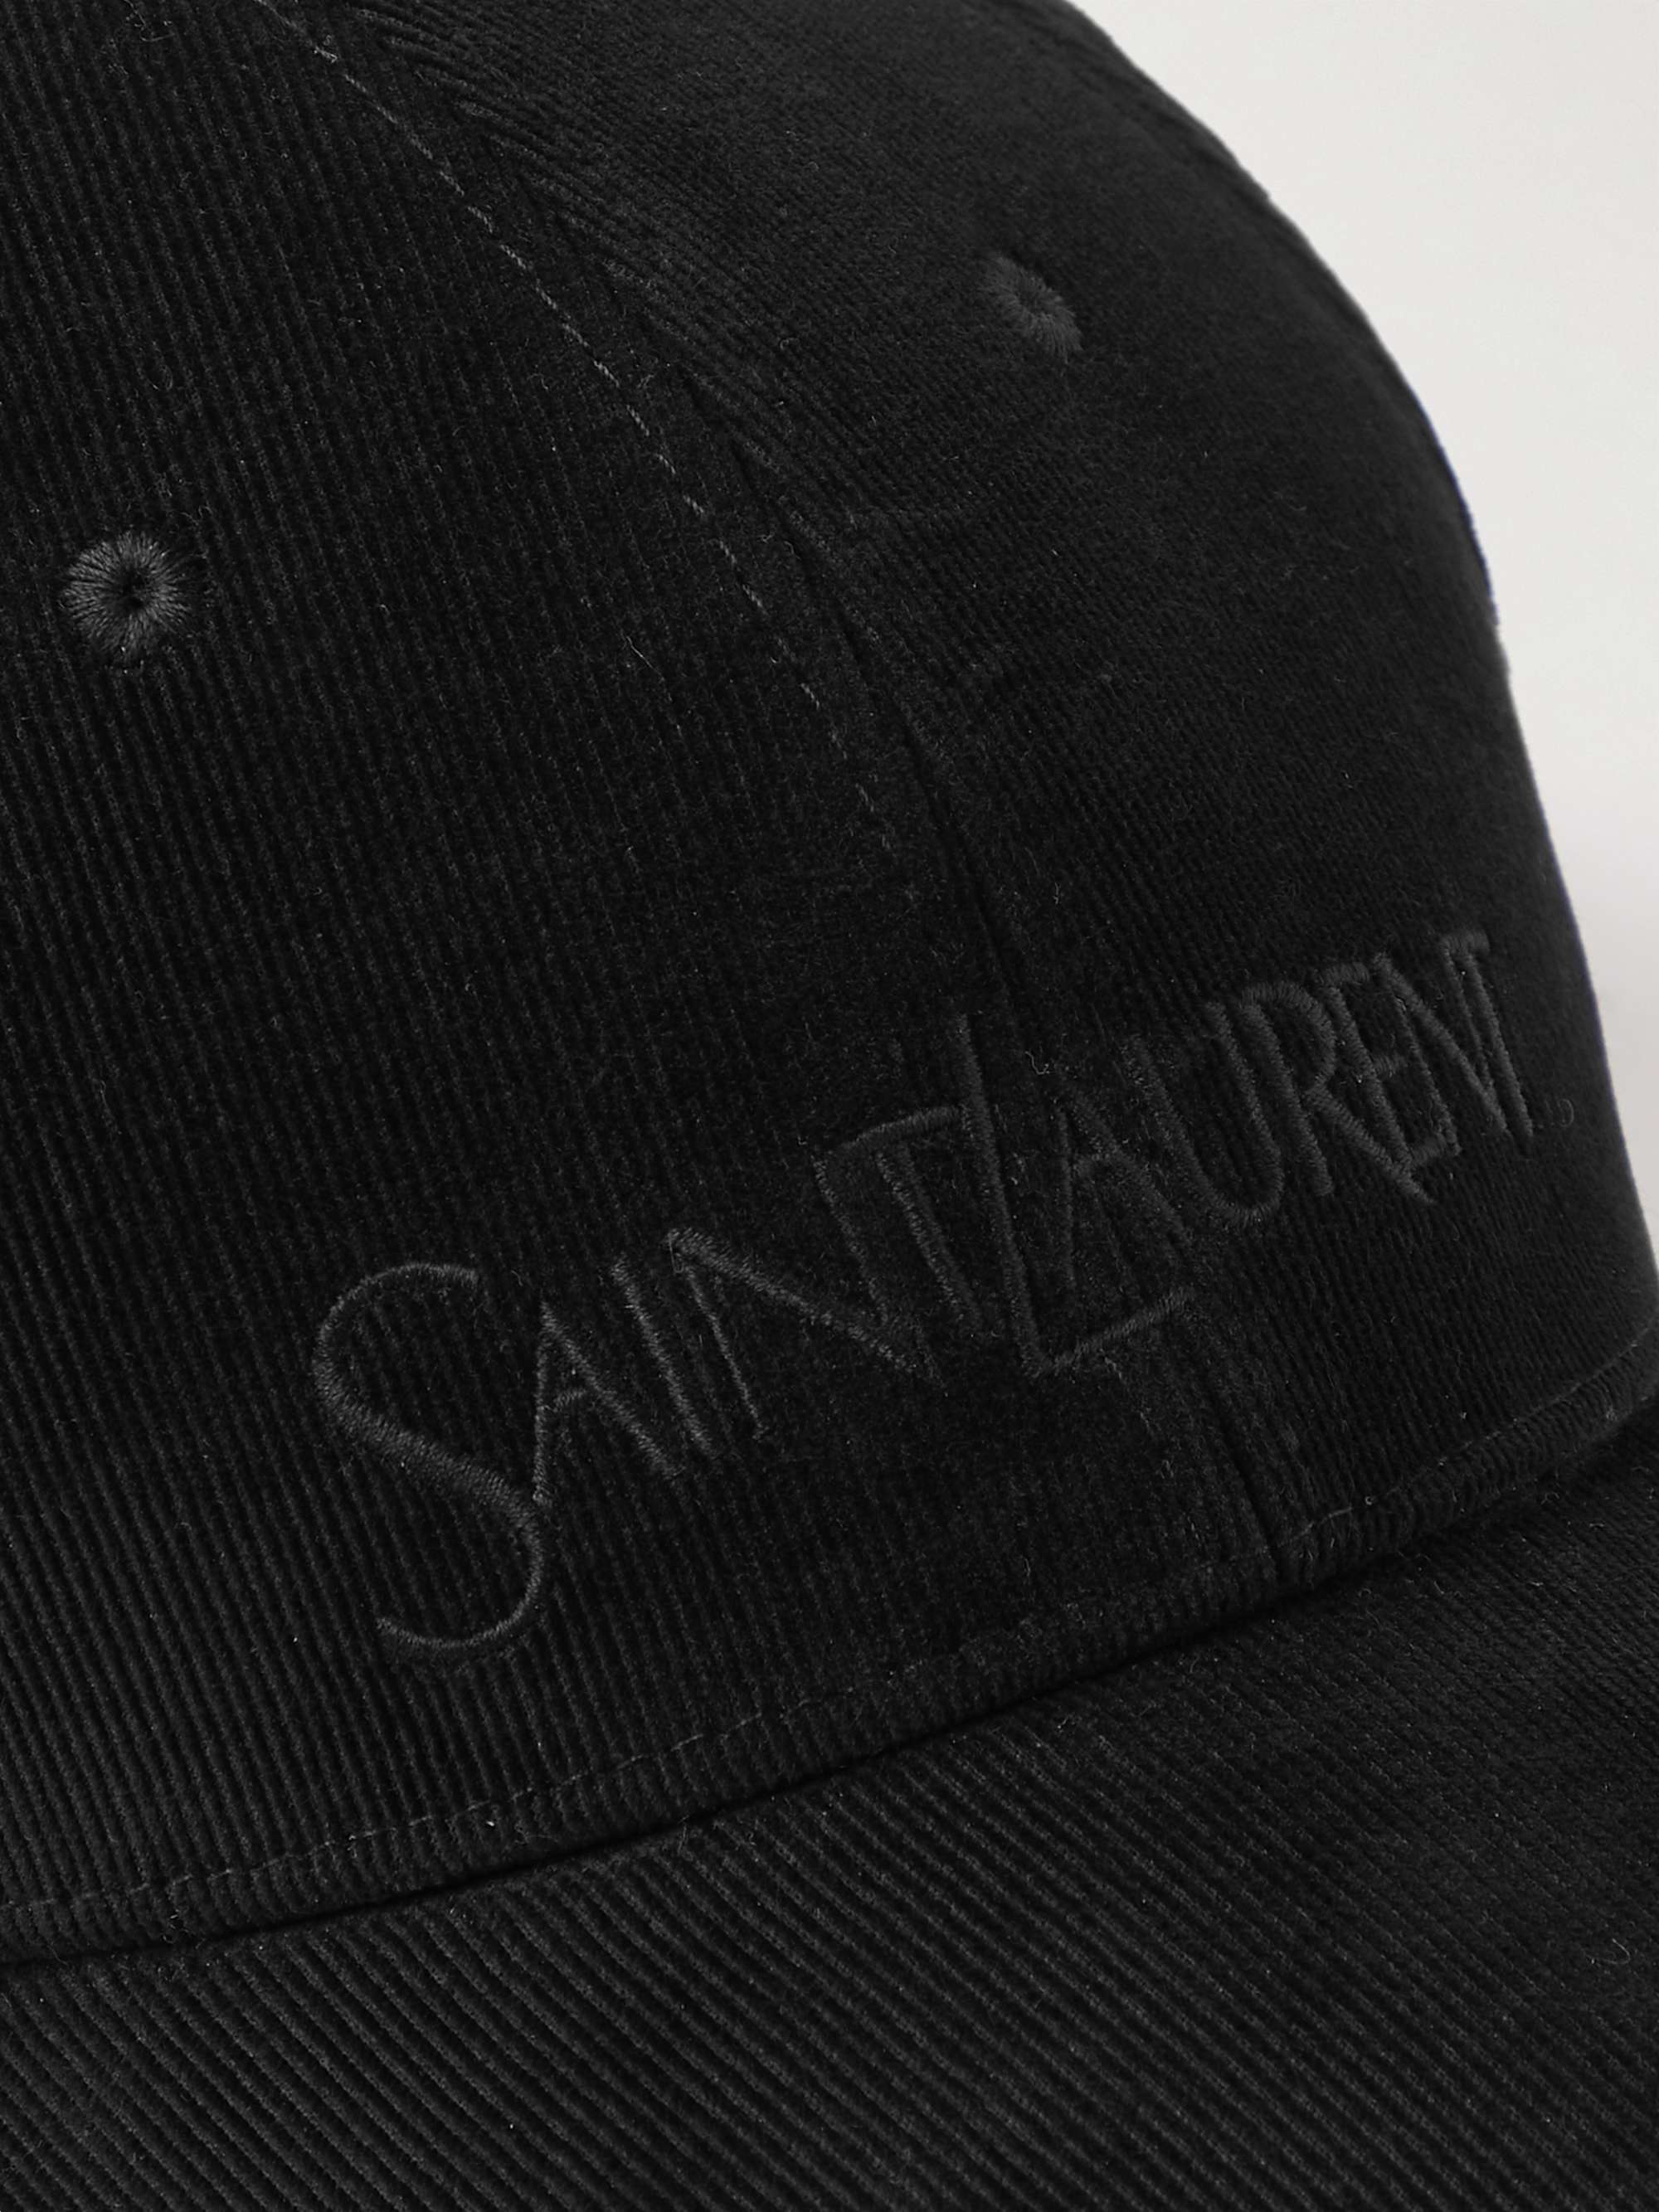 Saint Laurent Peaked Cap In Wool Felt And Leather in Black